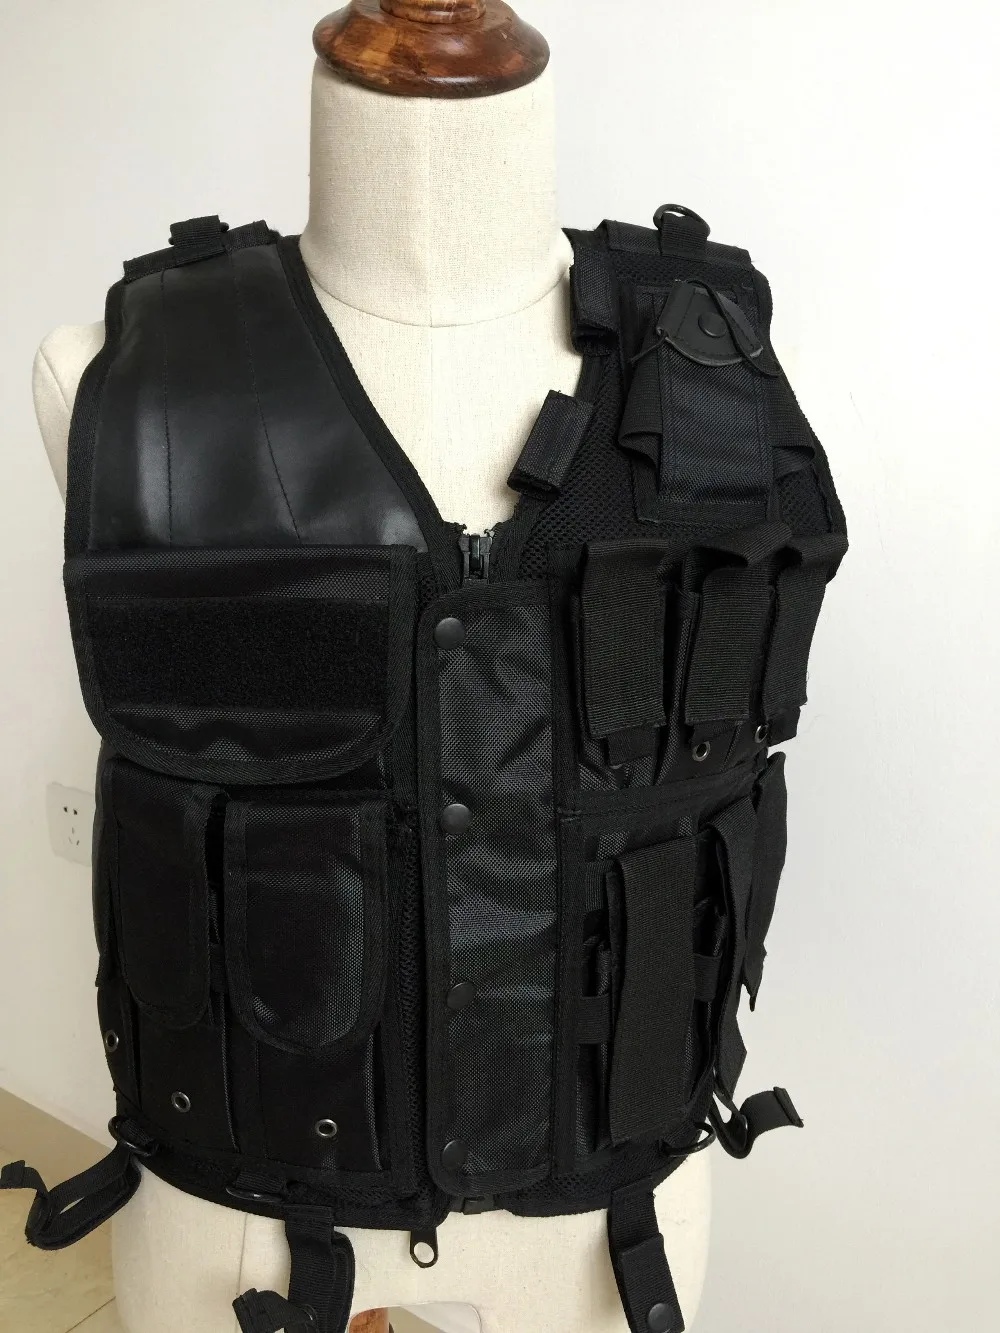 Modular Tactical Vest - Buy Tactical Vest,Modular Vest,Bulletproof Vest